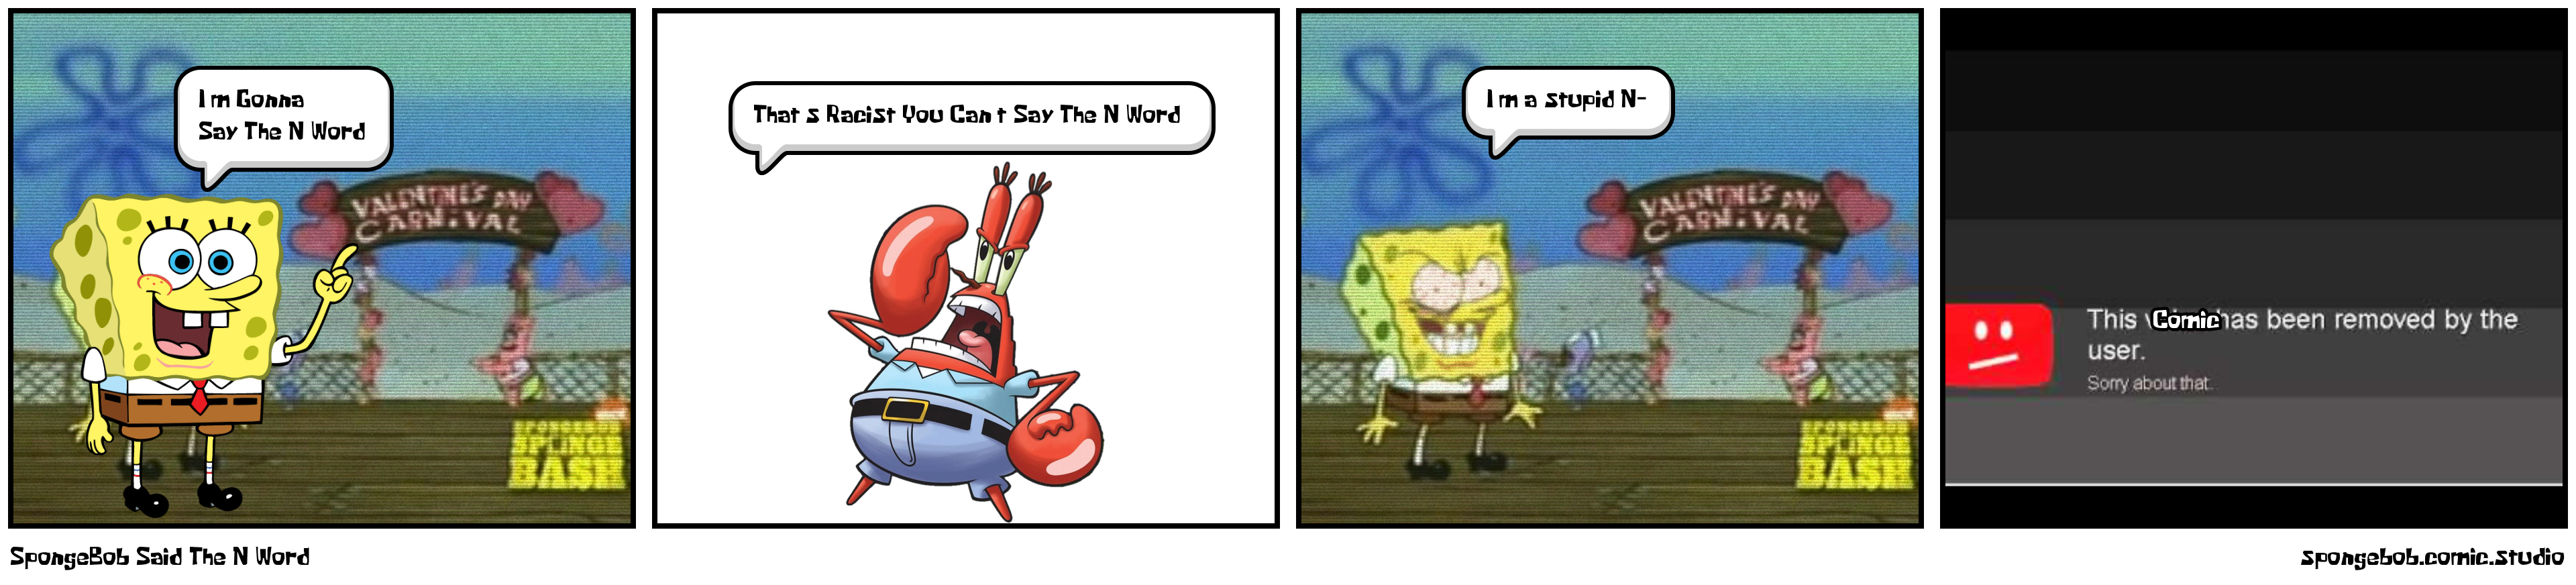 SpongeBob Said The N Word